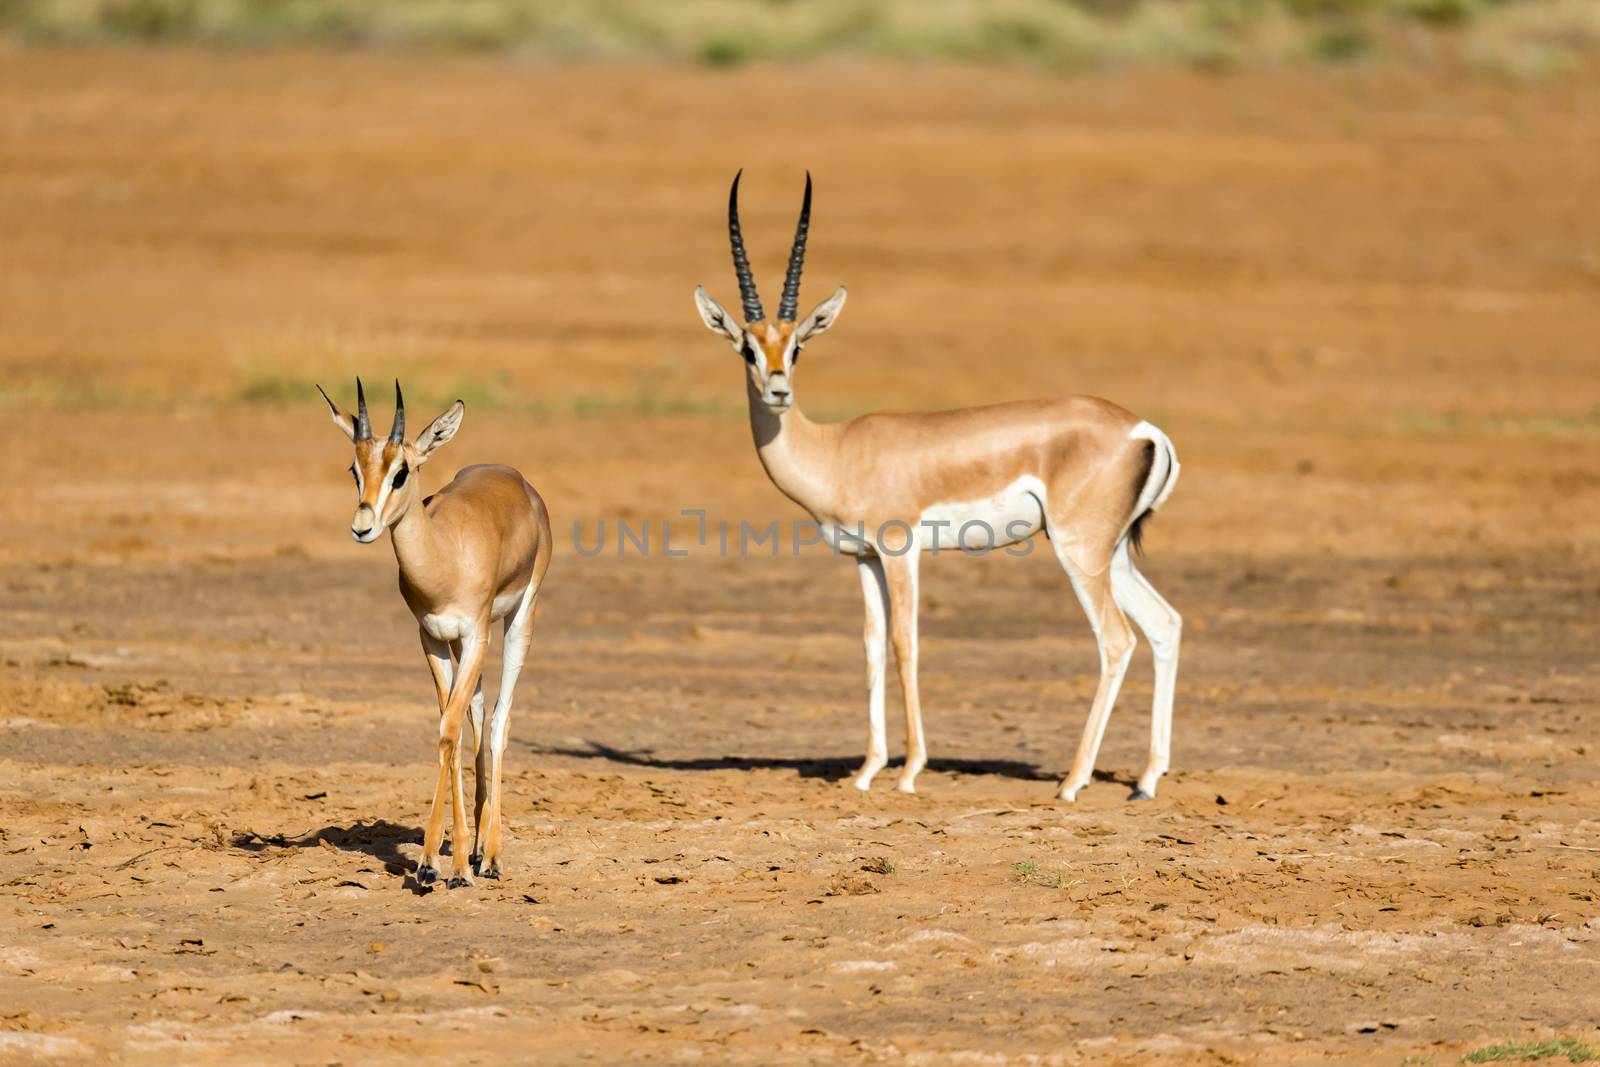 A Grant Gazelle in the savannah of Kenya